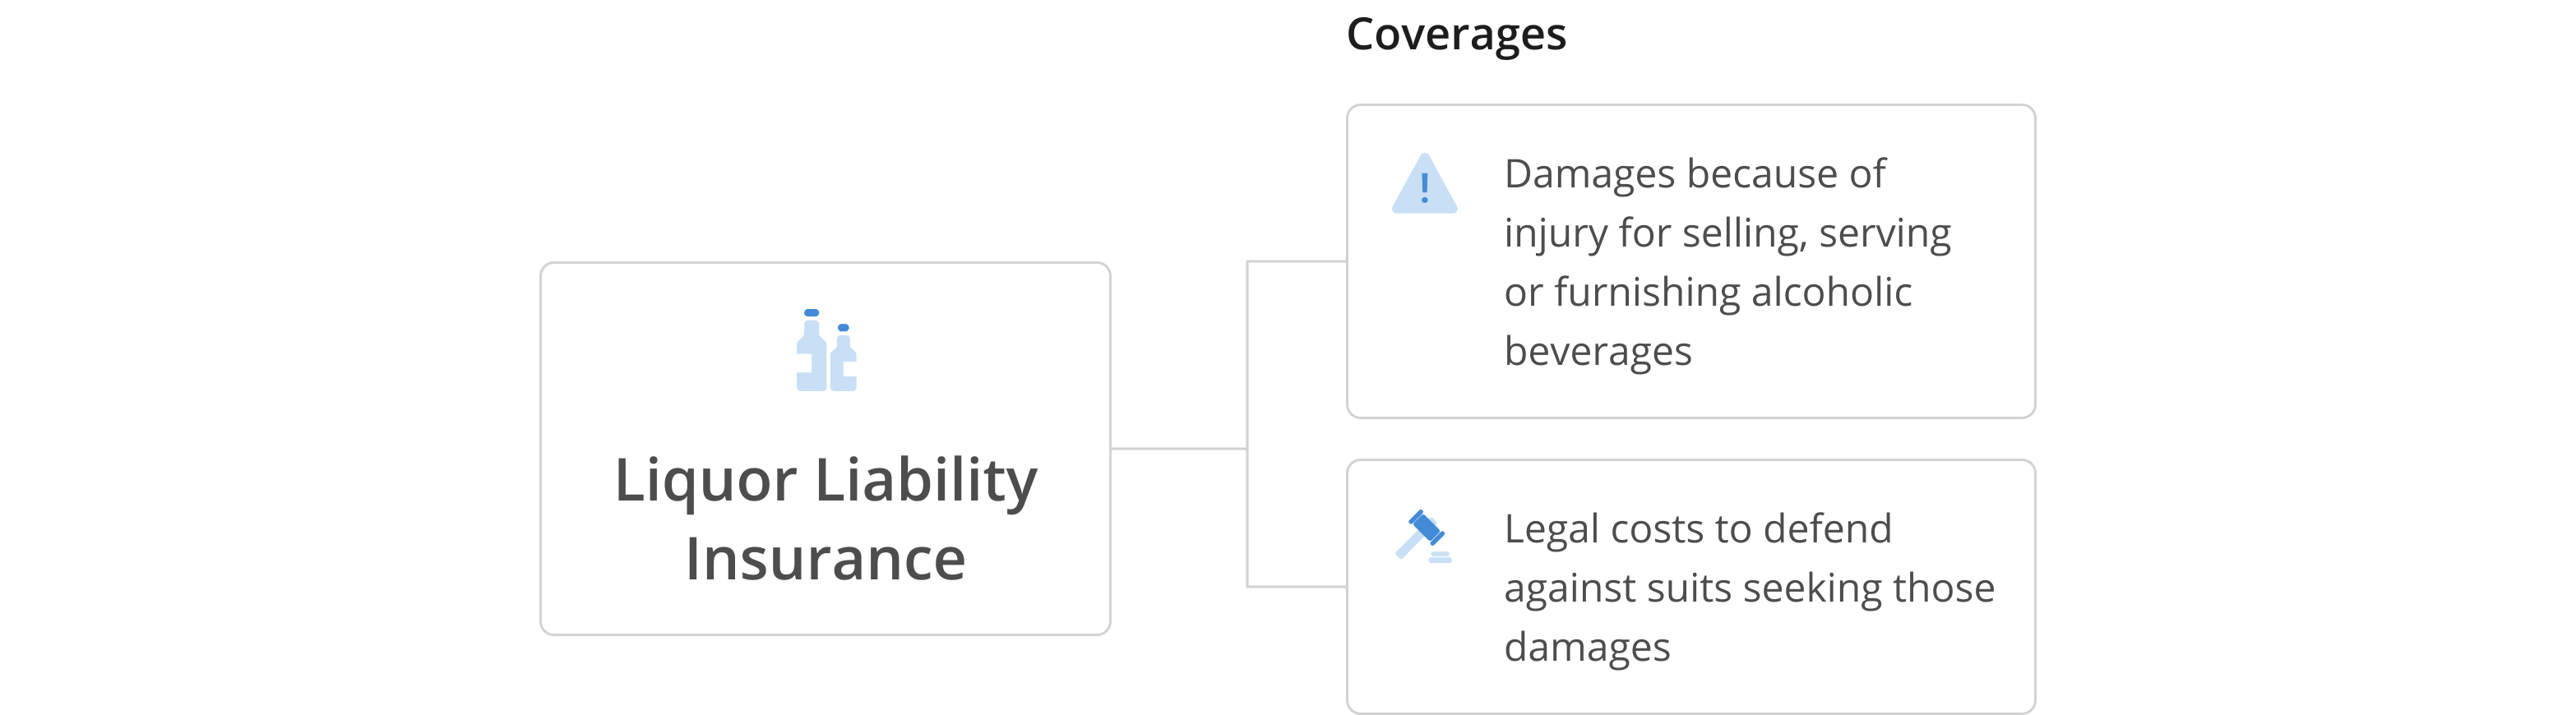 NEW - DESKTOP - Infographic - Liquor Liability Insurance@2x